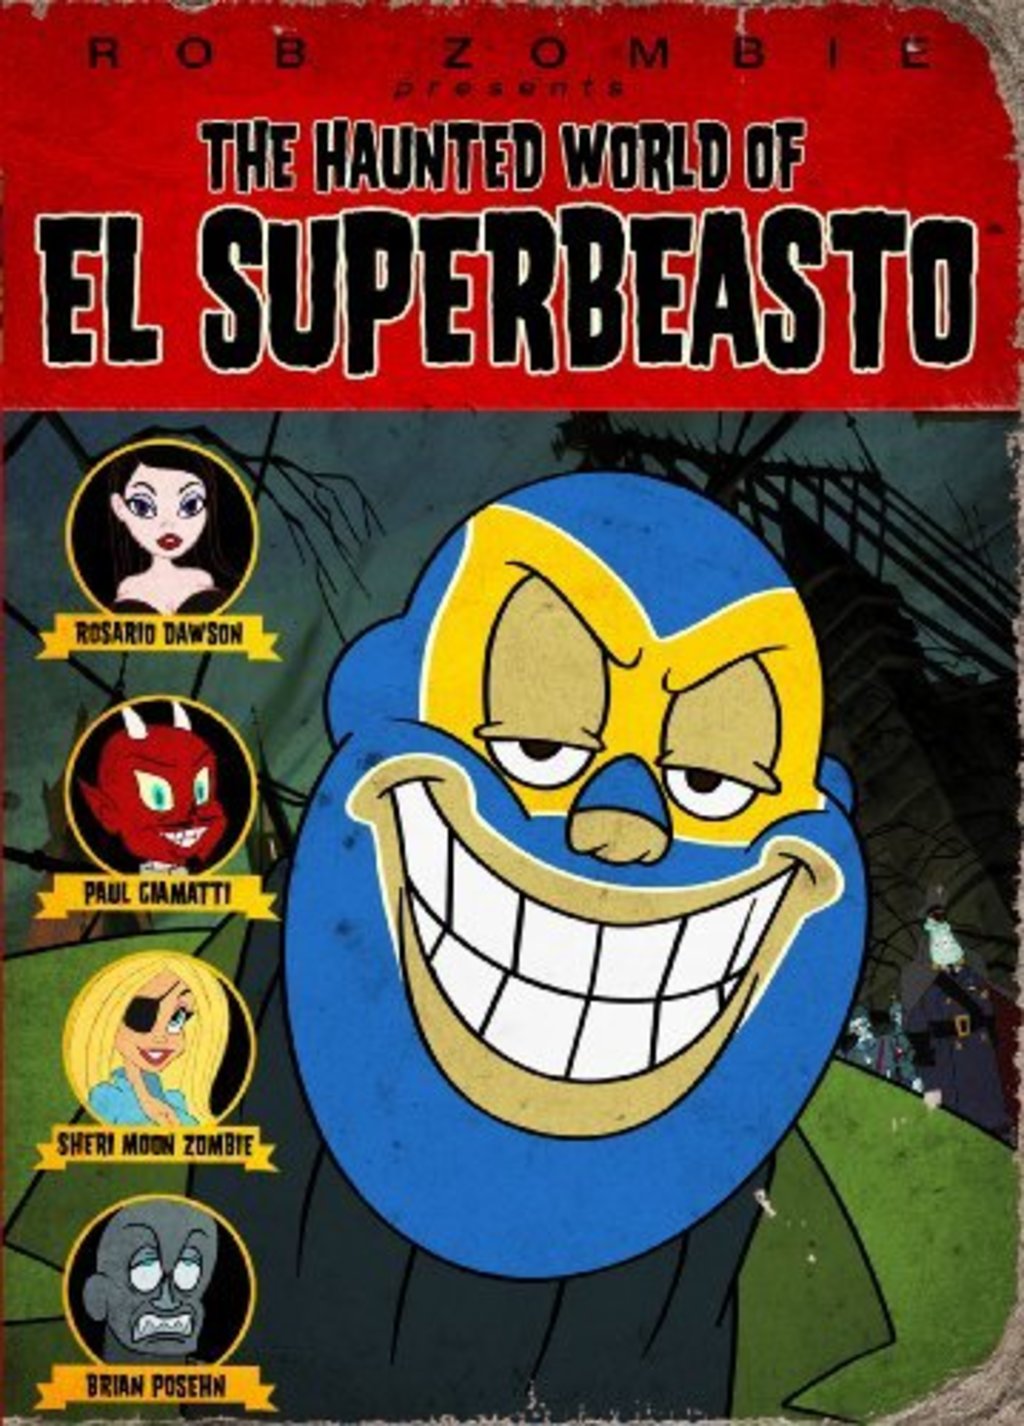 Watch The Haunted World of El Superbeasto on Netflix Today